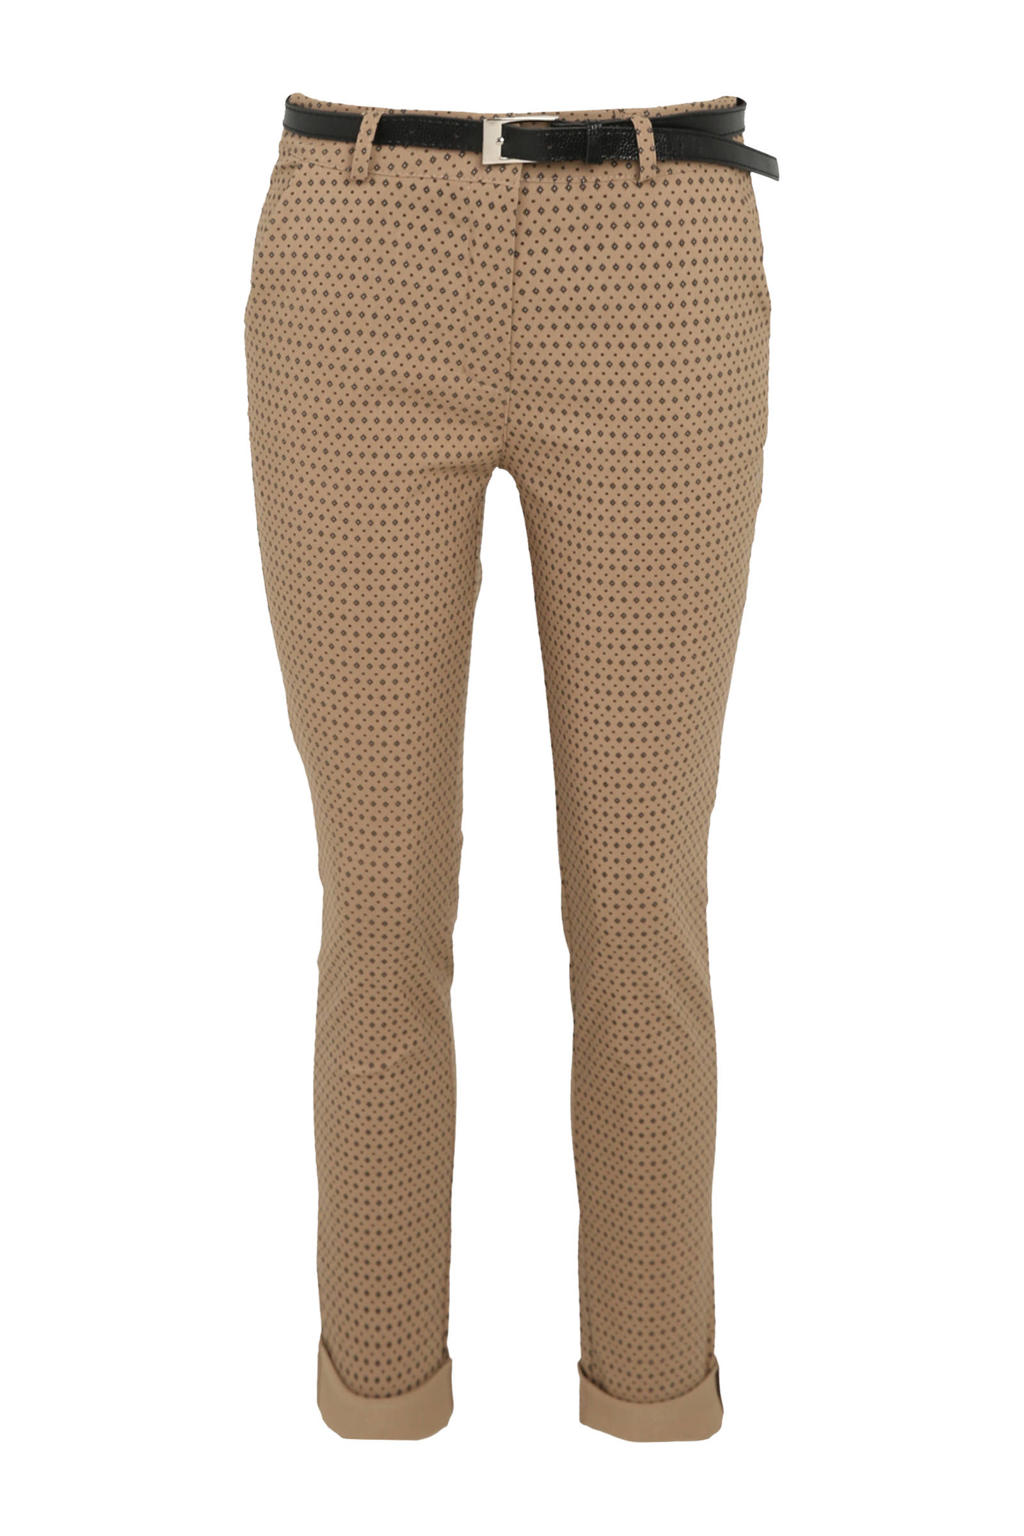 Bruine dames Cassis slim fit broek van polyester met regular waist